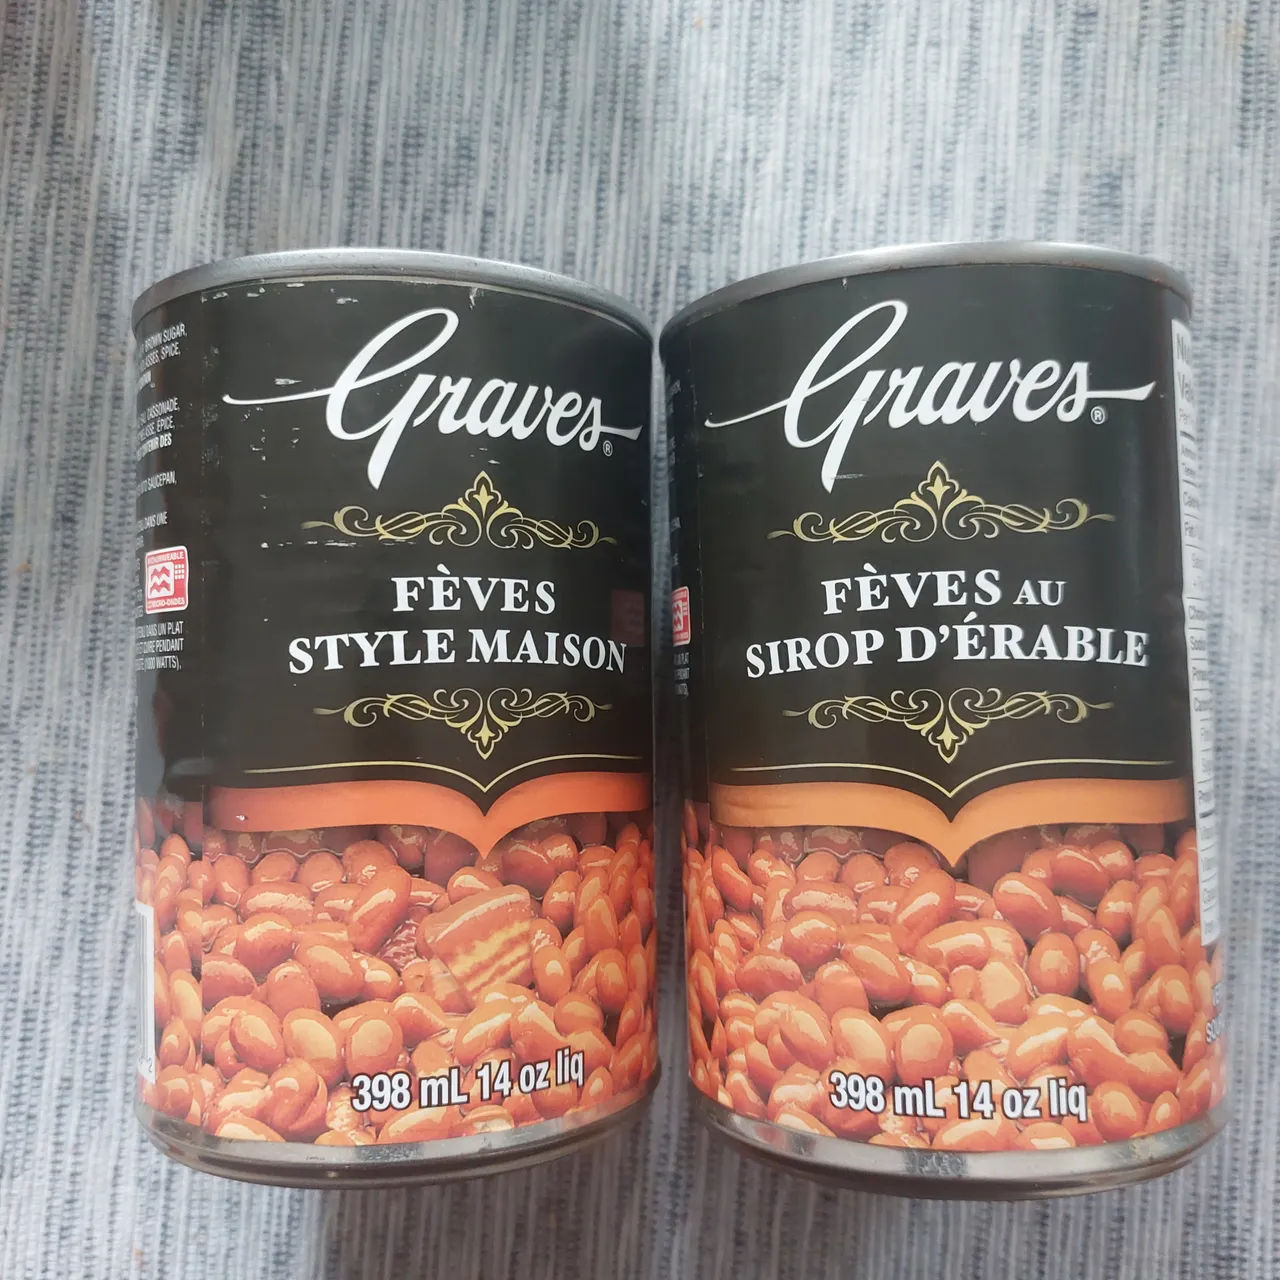 Graves Beans photo 2